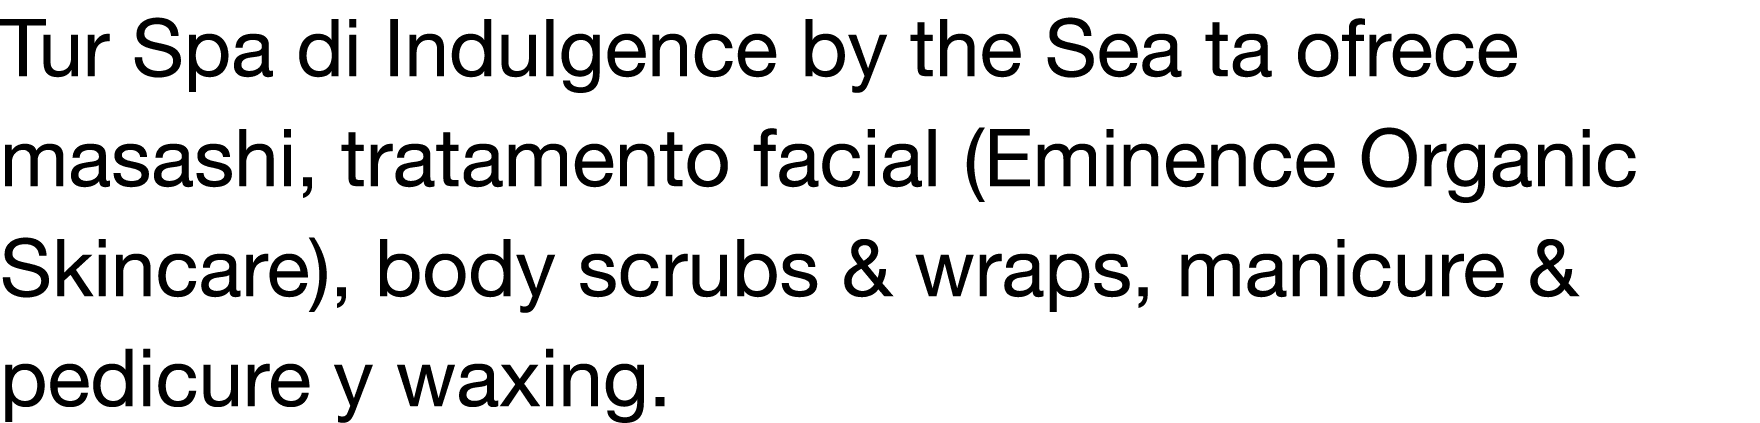 Tur Spa di Indulgence by the Sea ta ofrece masashi, tratamento facial (Eminence Organic Skincare), body scrubs & wrap   